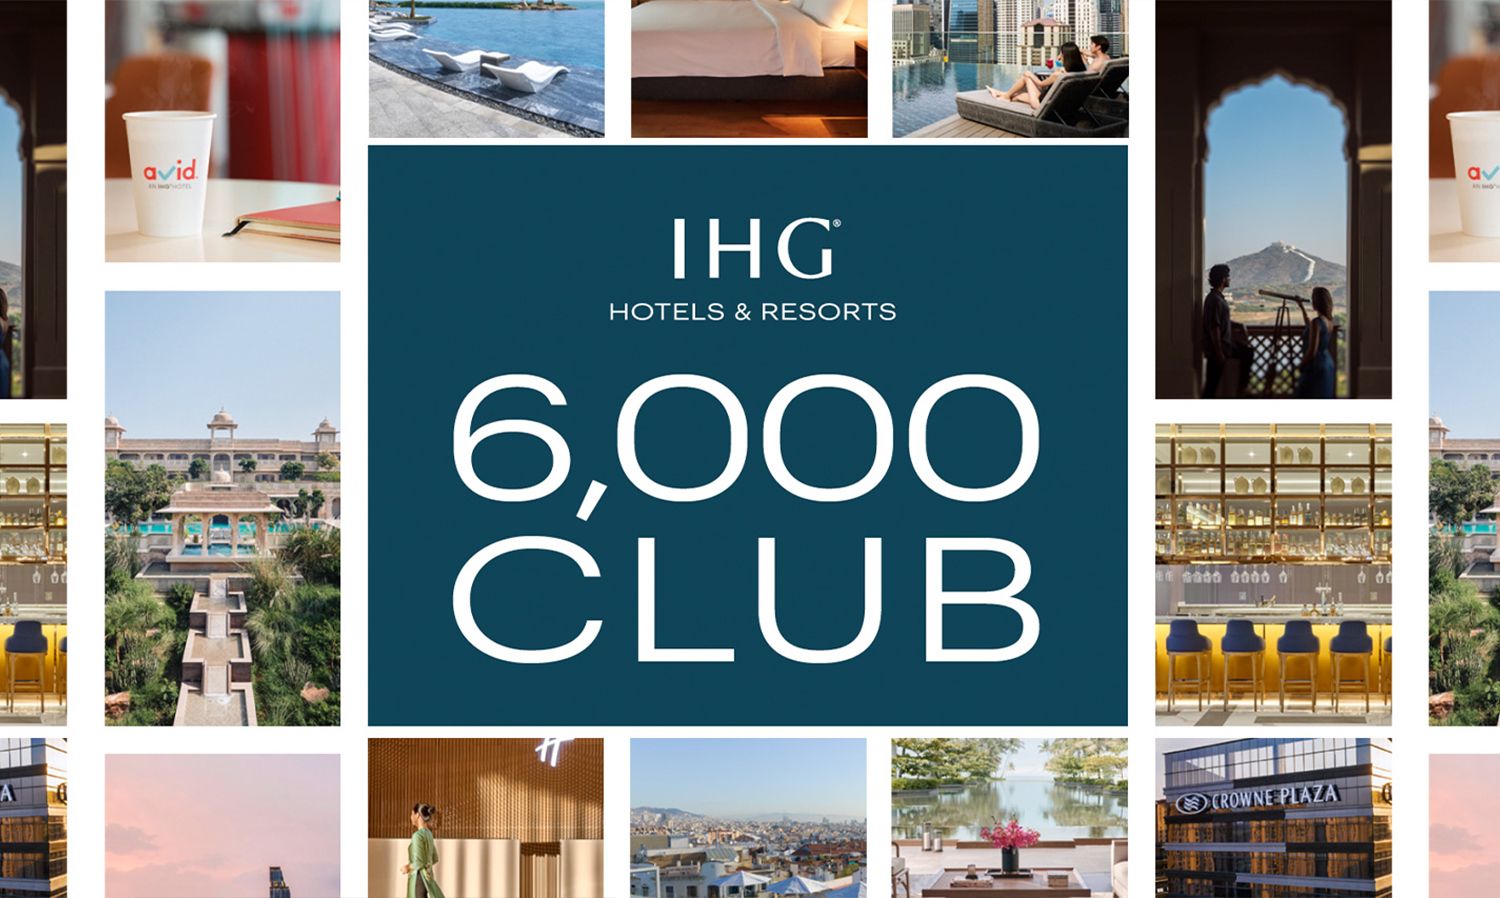 IHG Hotels & Resorts ตอกย้ำความสำเร็จโรงแรมในเครือครบ 6,000 แห่ง ด้วยโรงแรมเปิดใหม่ พร้อมพันธมิตรน่าตื่นตา เพื่อตอบแทนความเชื่อมั่นของนักเดินทาง